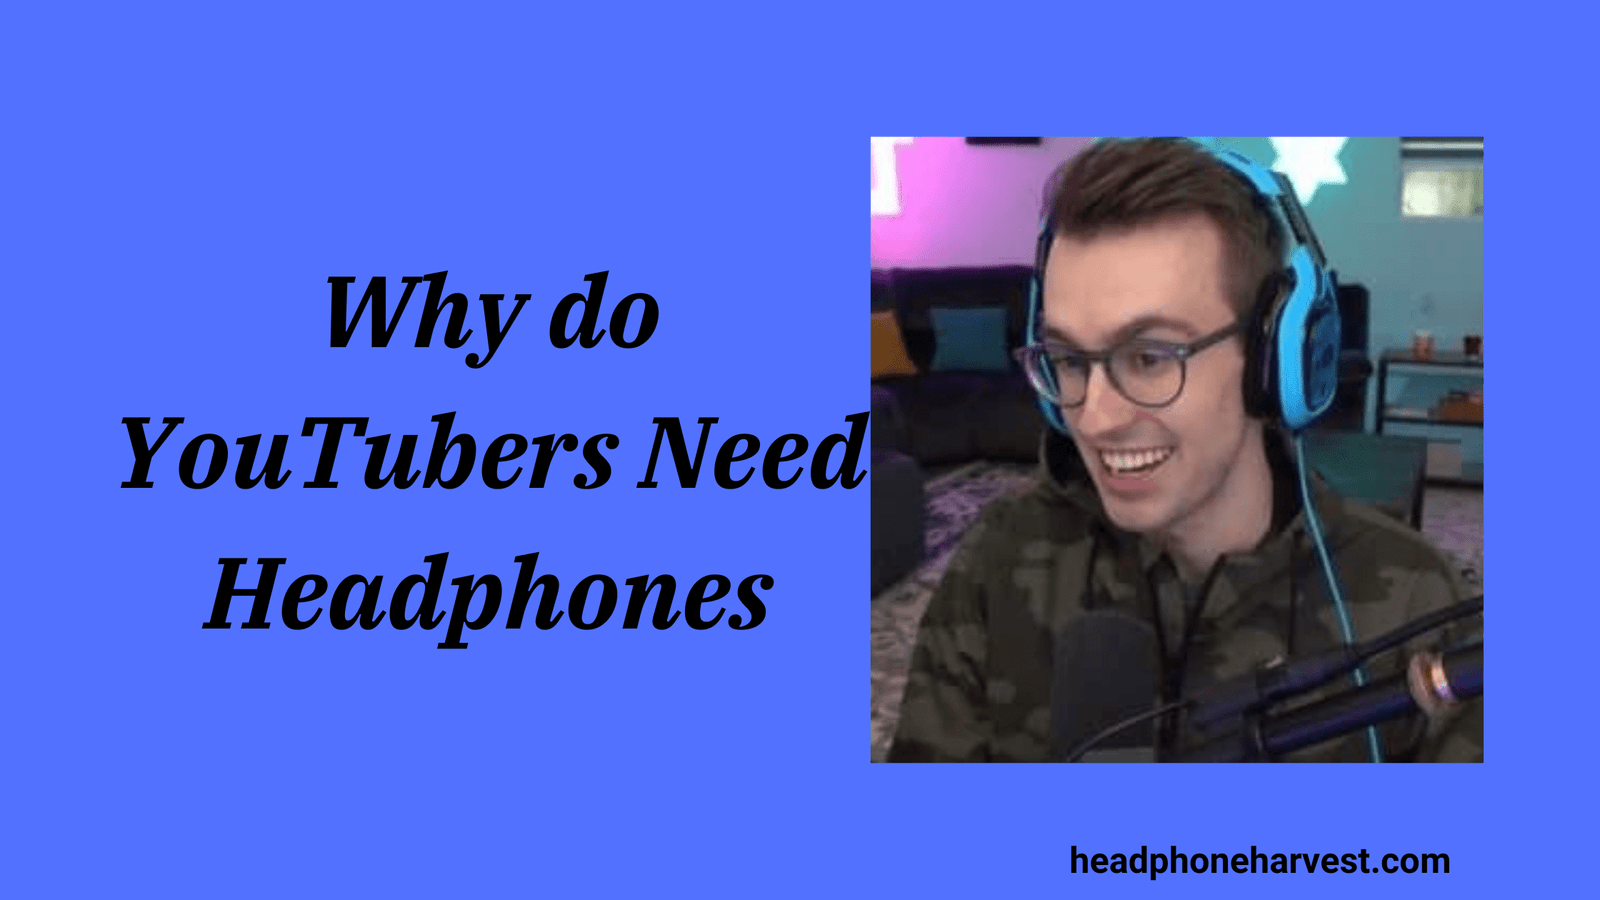 Why do YouTubers Need Headphones